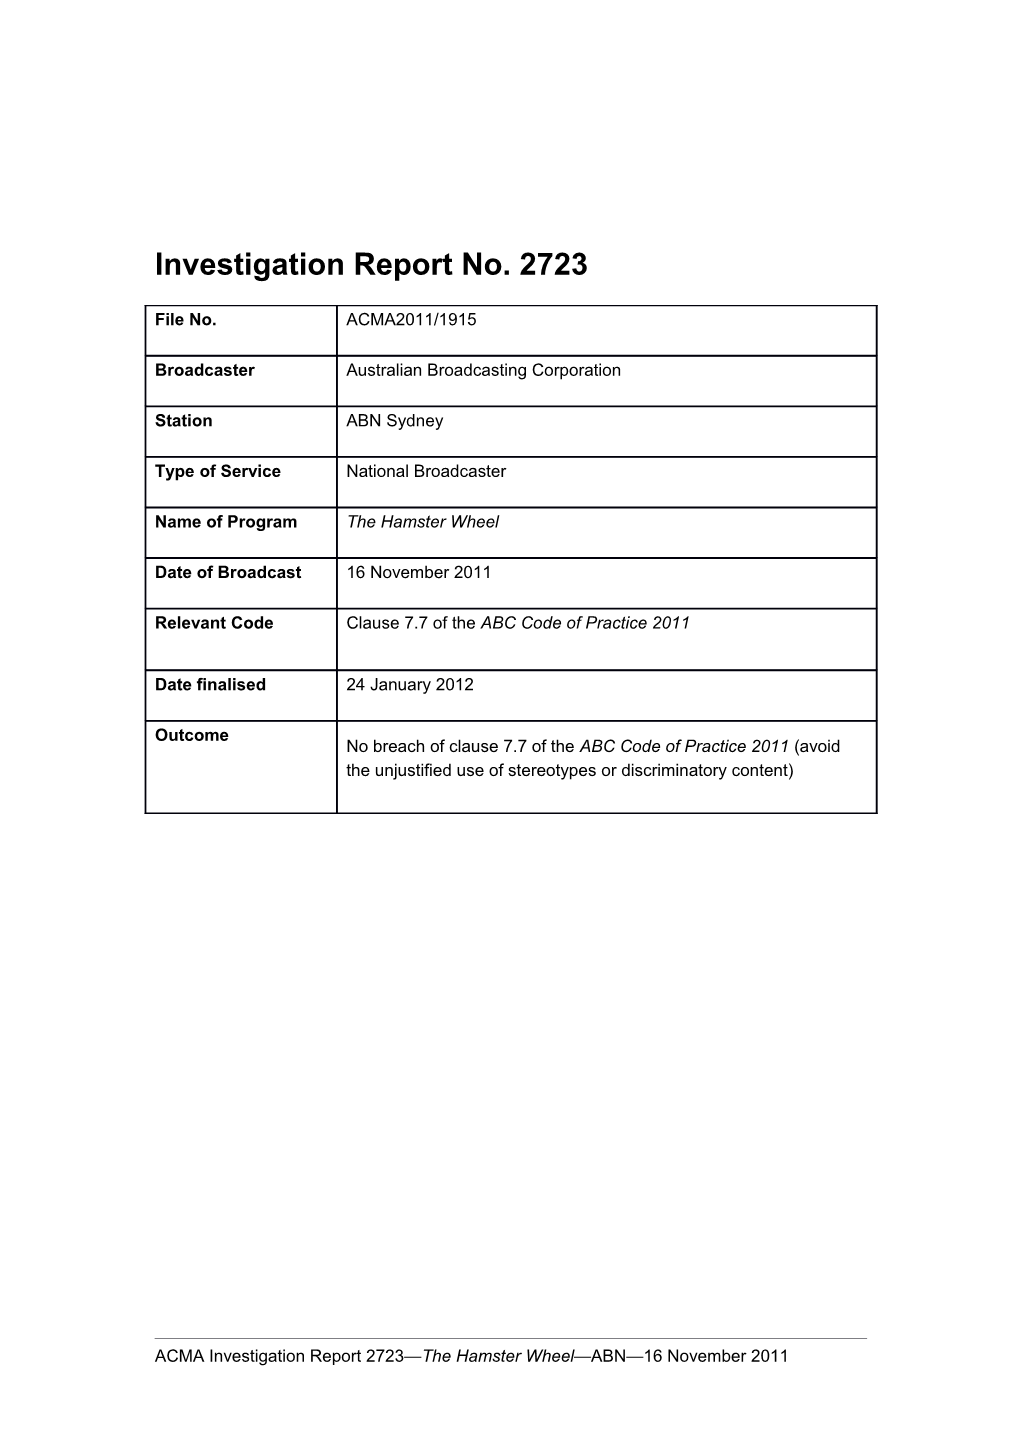 ABC (ABN Sydney) - ACMA Investigation Report 2723